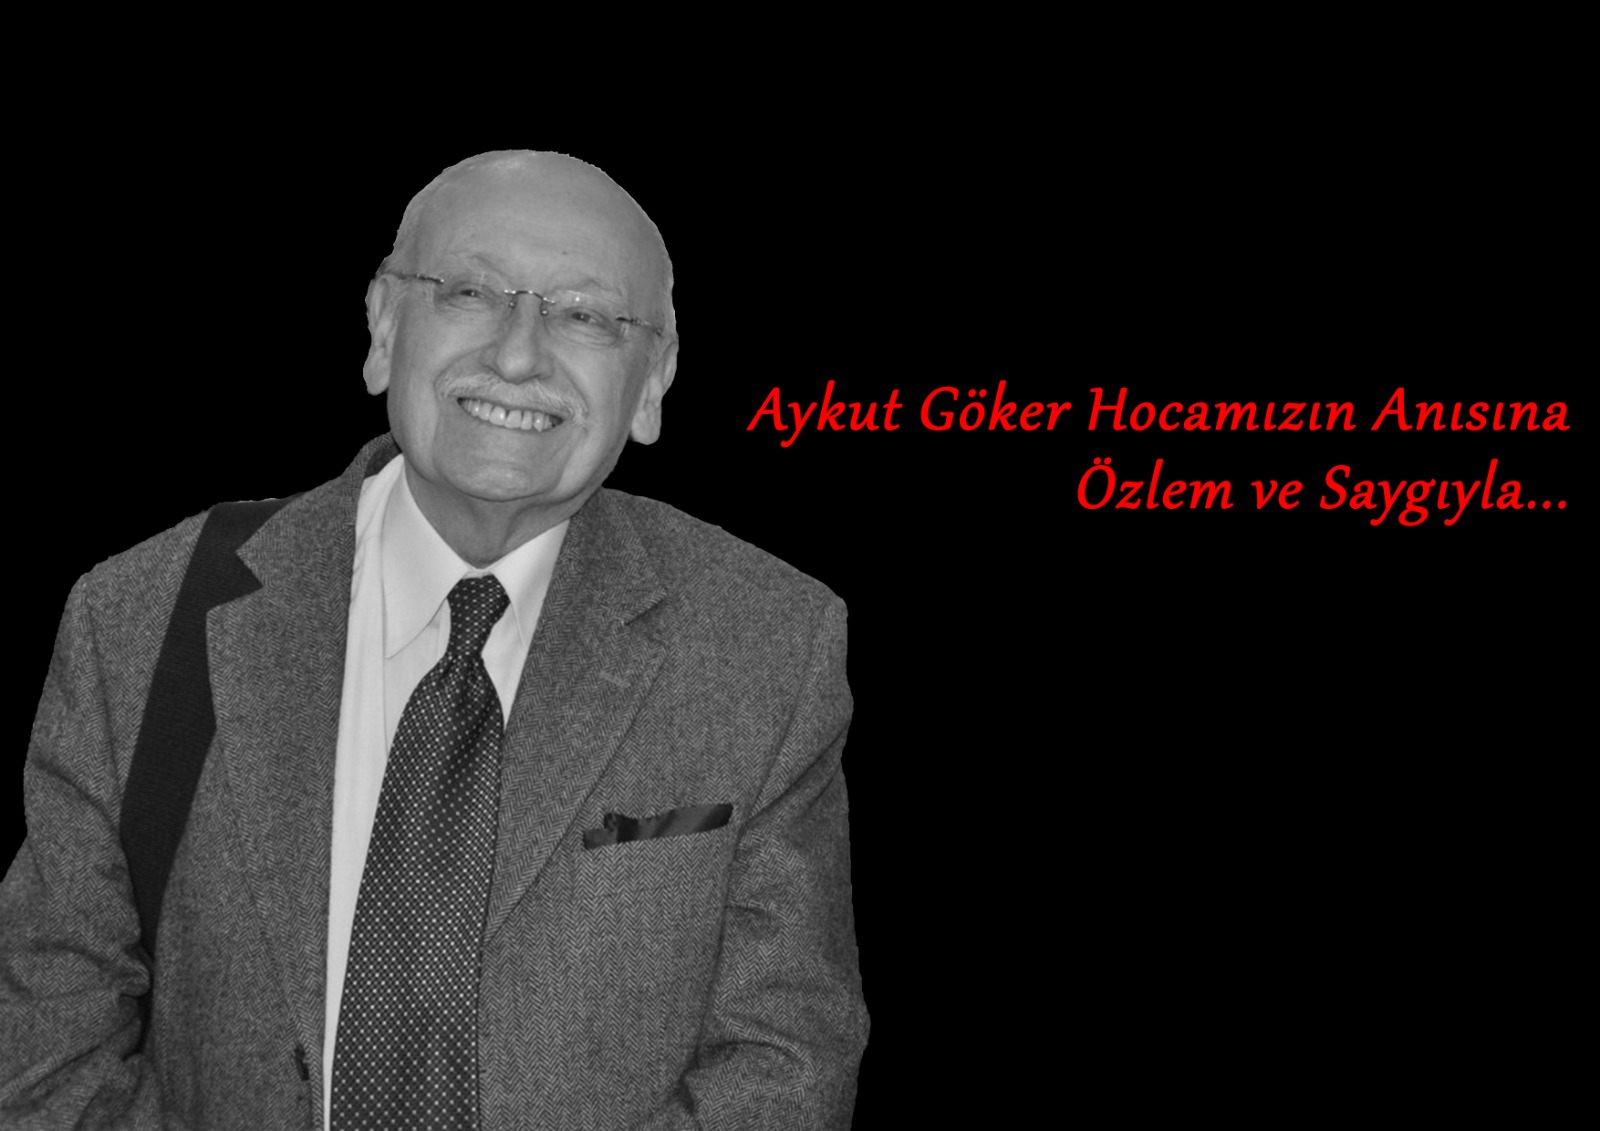 Aykut Goker